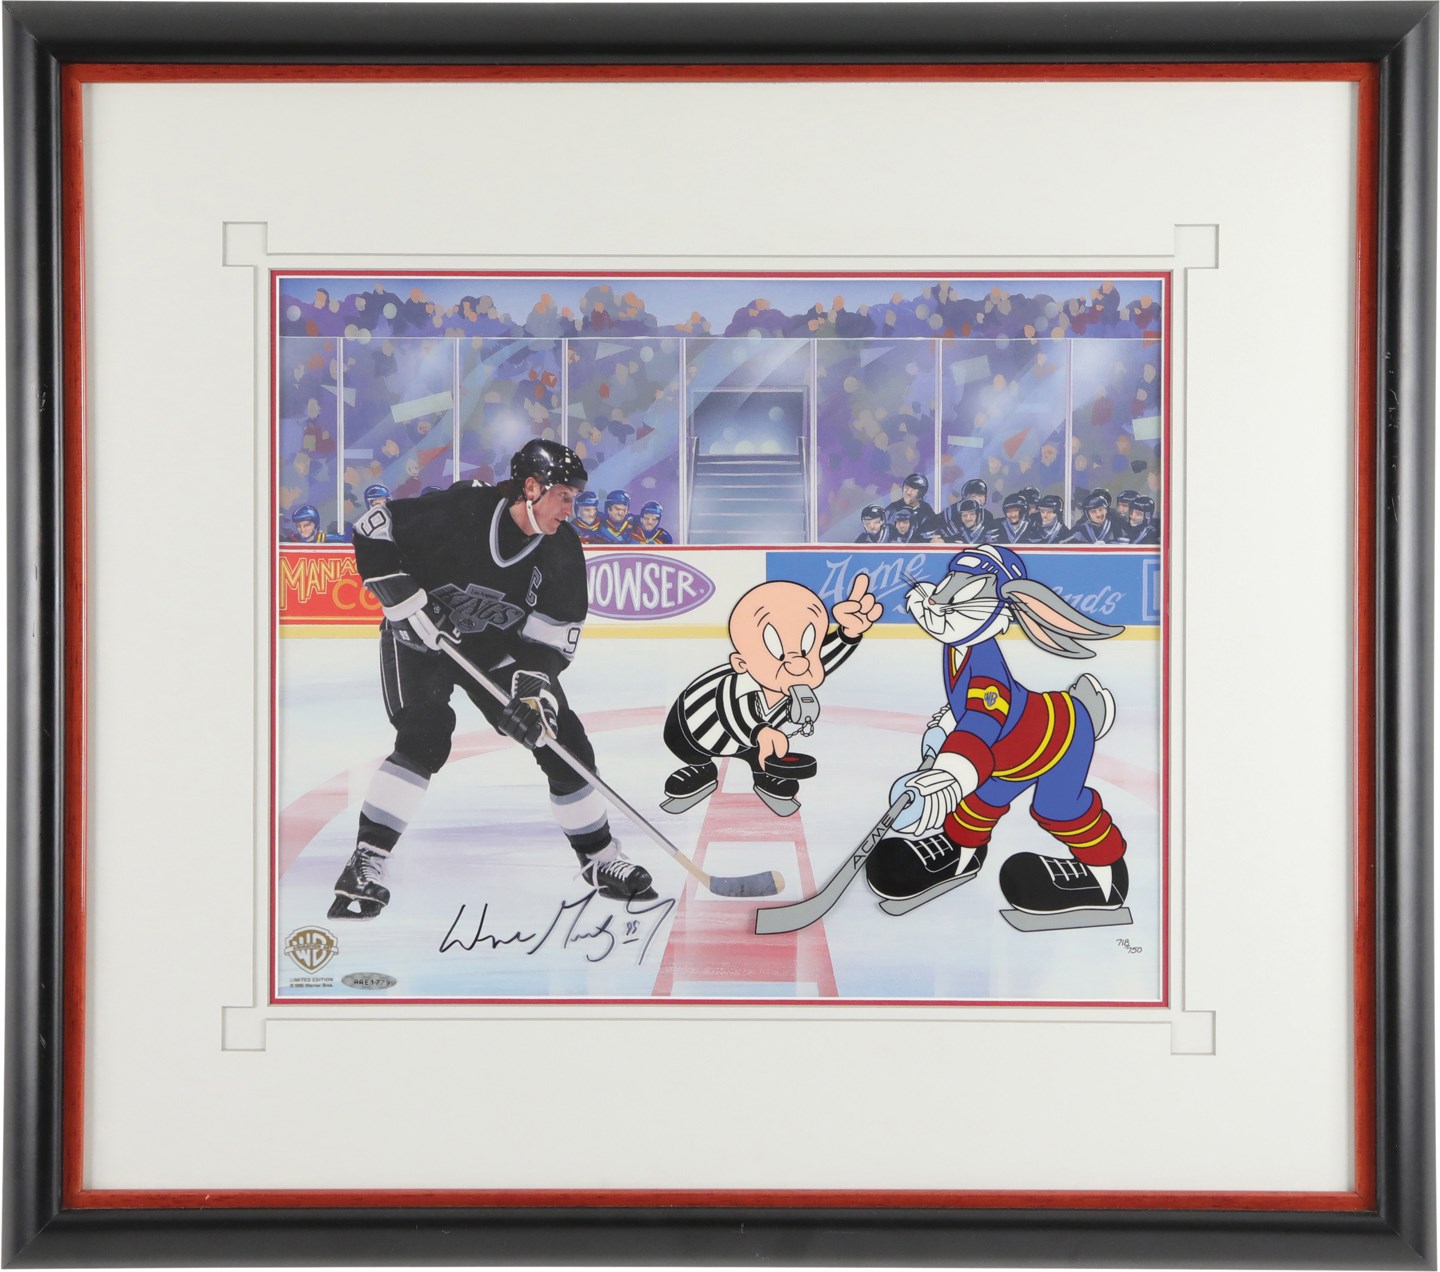 Hockey - 1995 Wayne Gretzky Signed Limited-Edition Warner Bros. Animation Cel (Upper Deck)